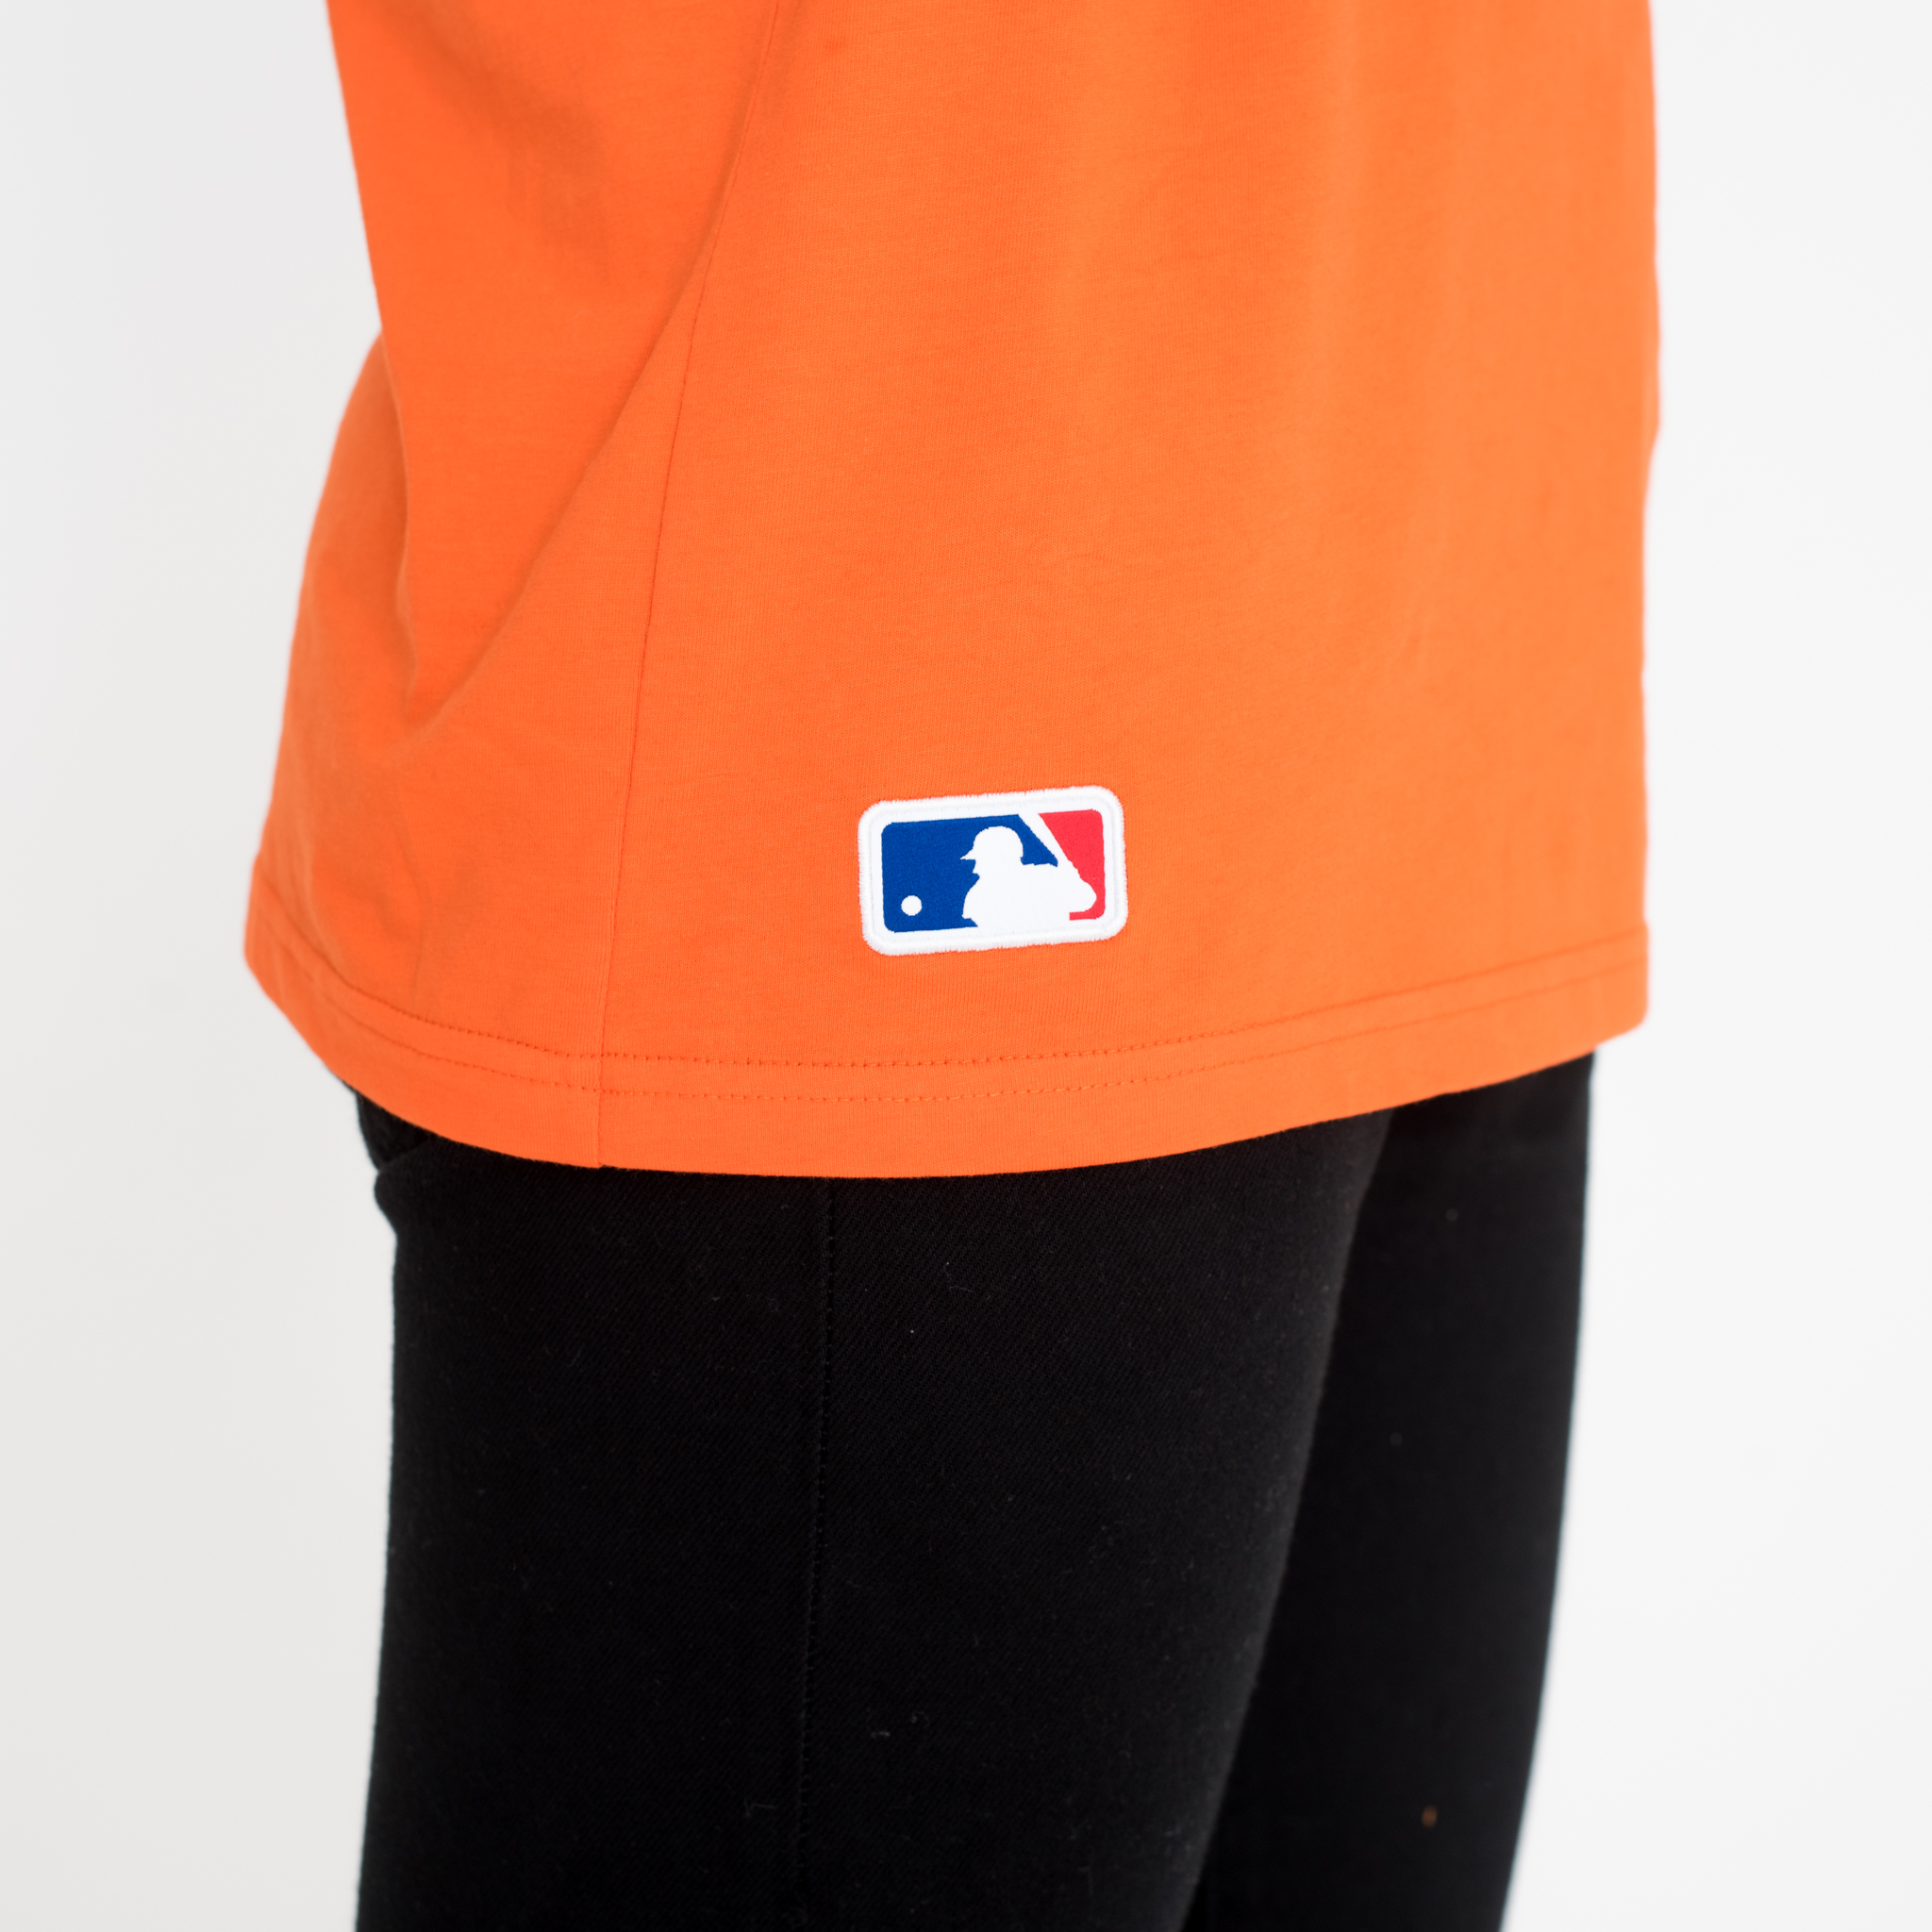 New York Yankees – T-Shirt – Orange